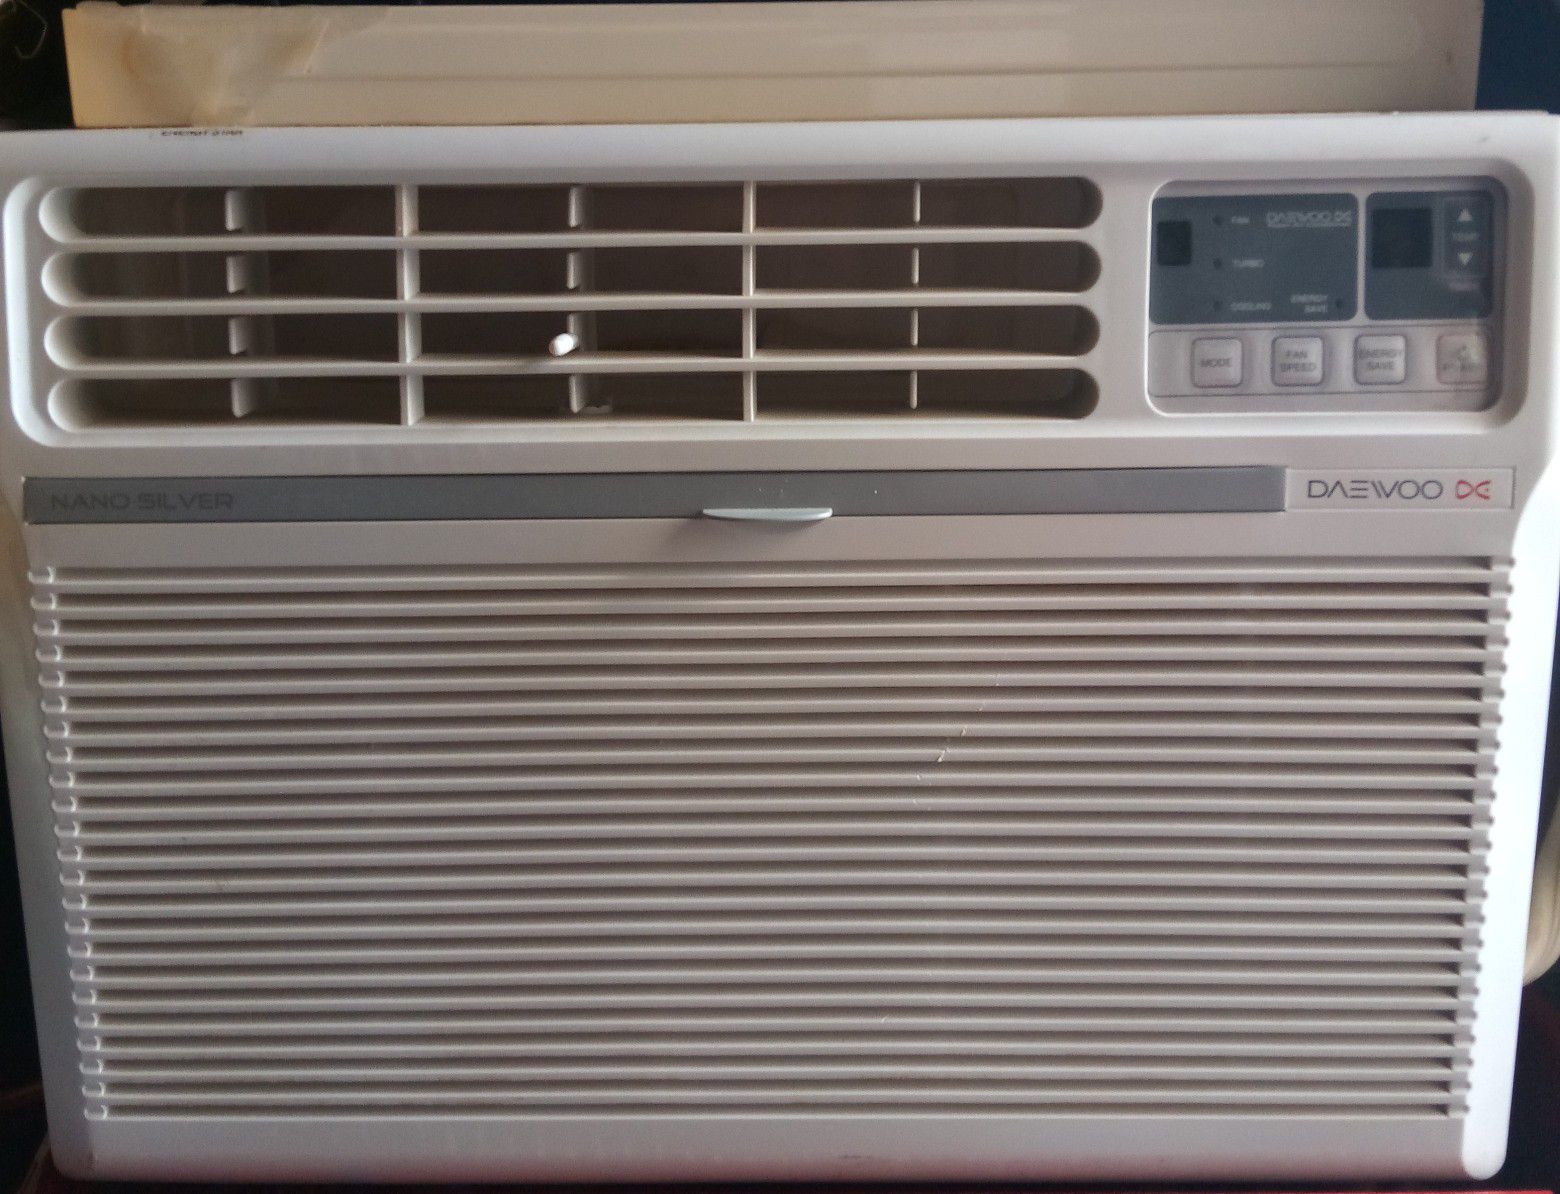 Daevoo air conditioner